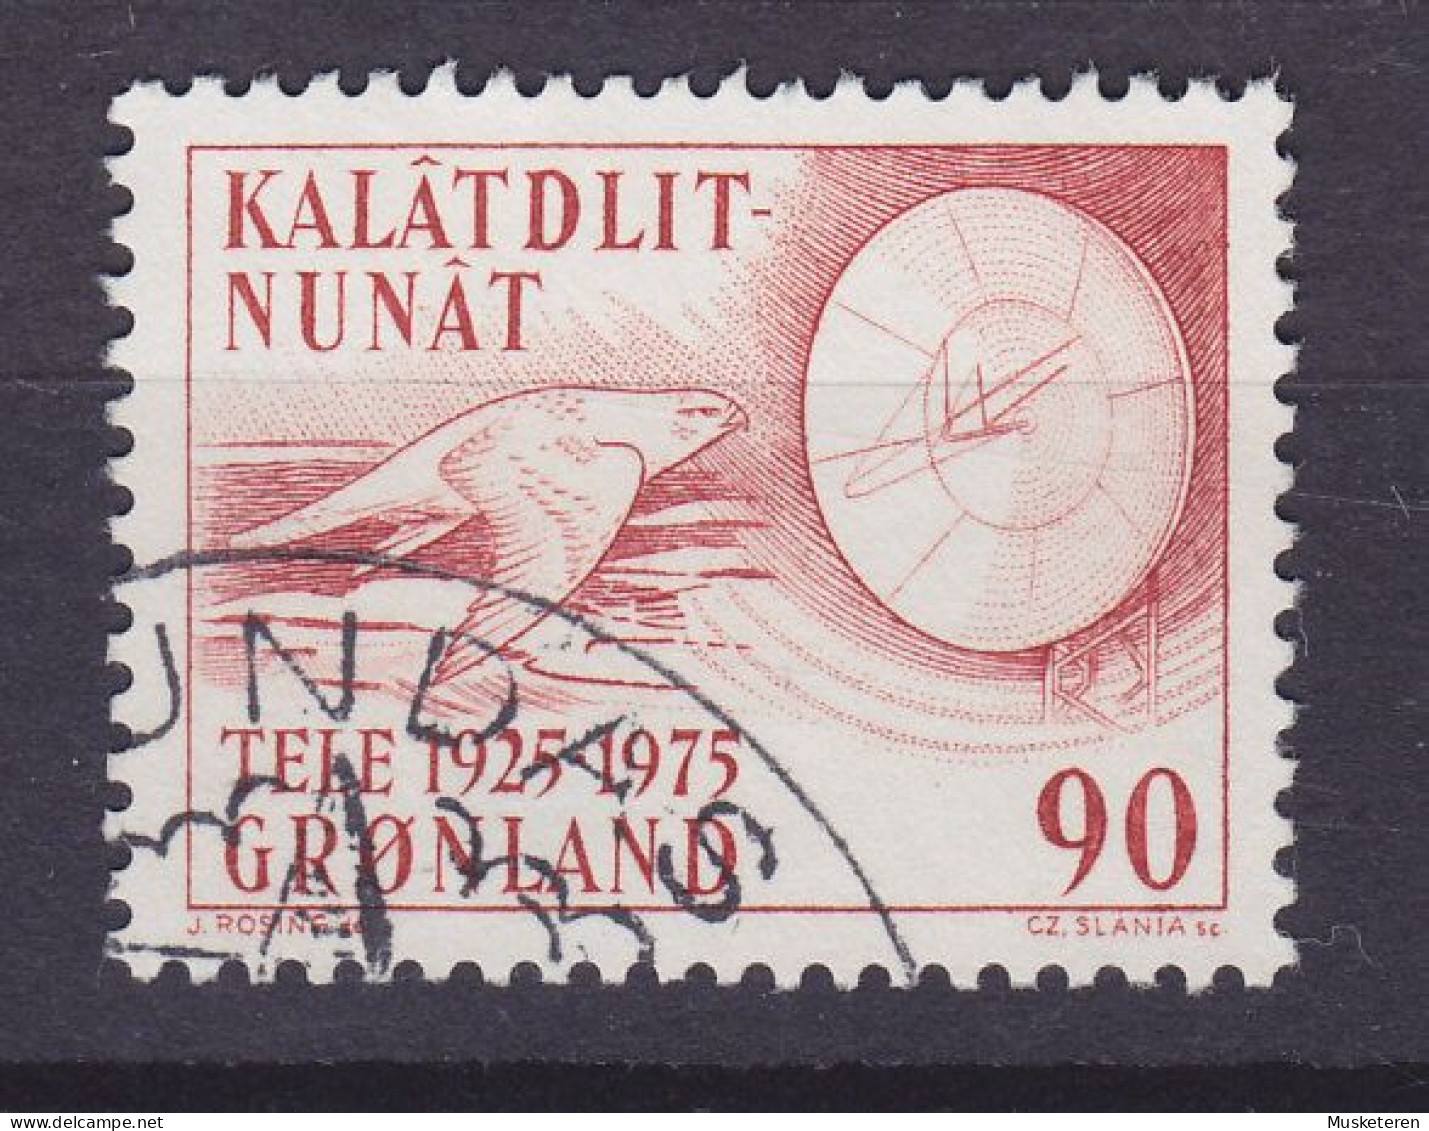 Greenland 1975 Mi. 94, 90 (Ø) Telekommunikation Bird Vogel Oiseau Gerfalke Parabolantenne (Cz. Slania) - Used Stamps